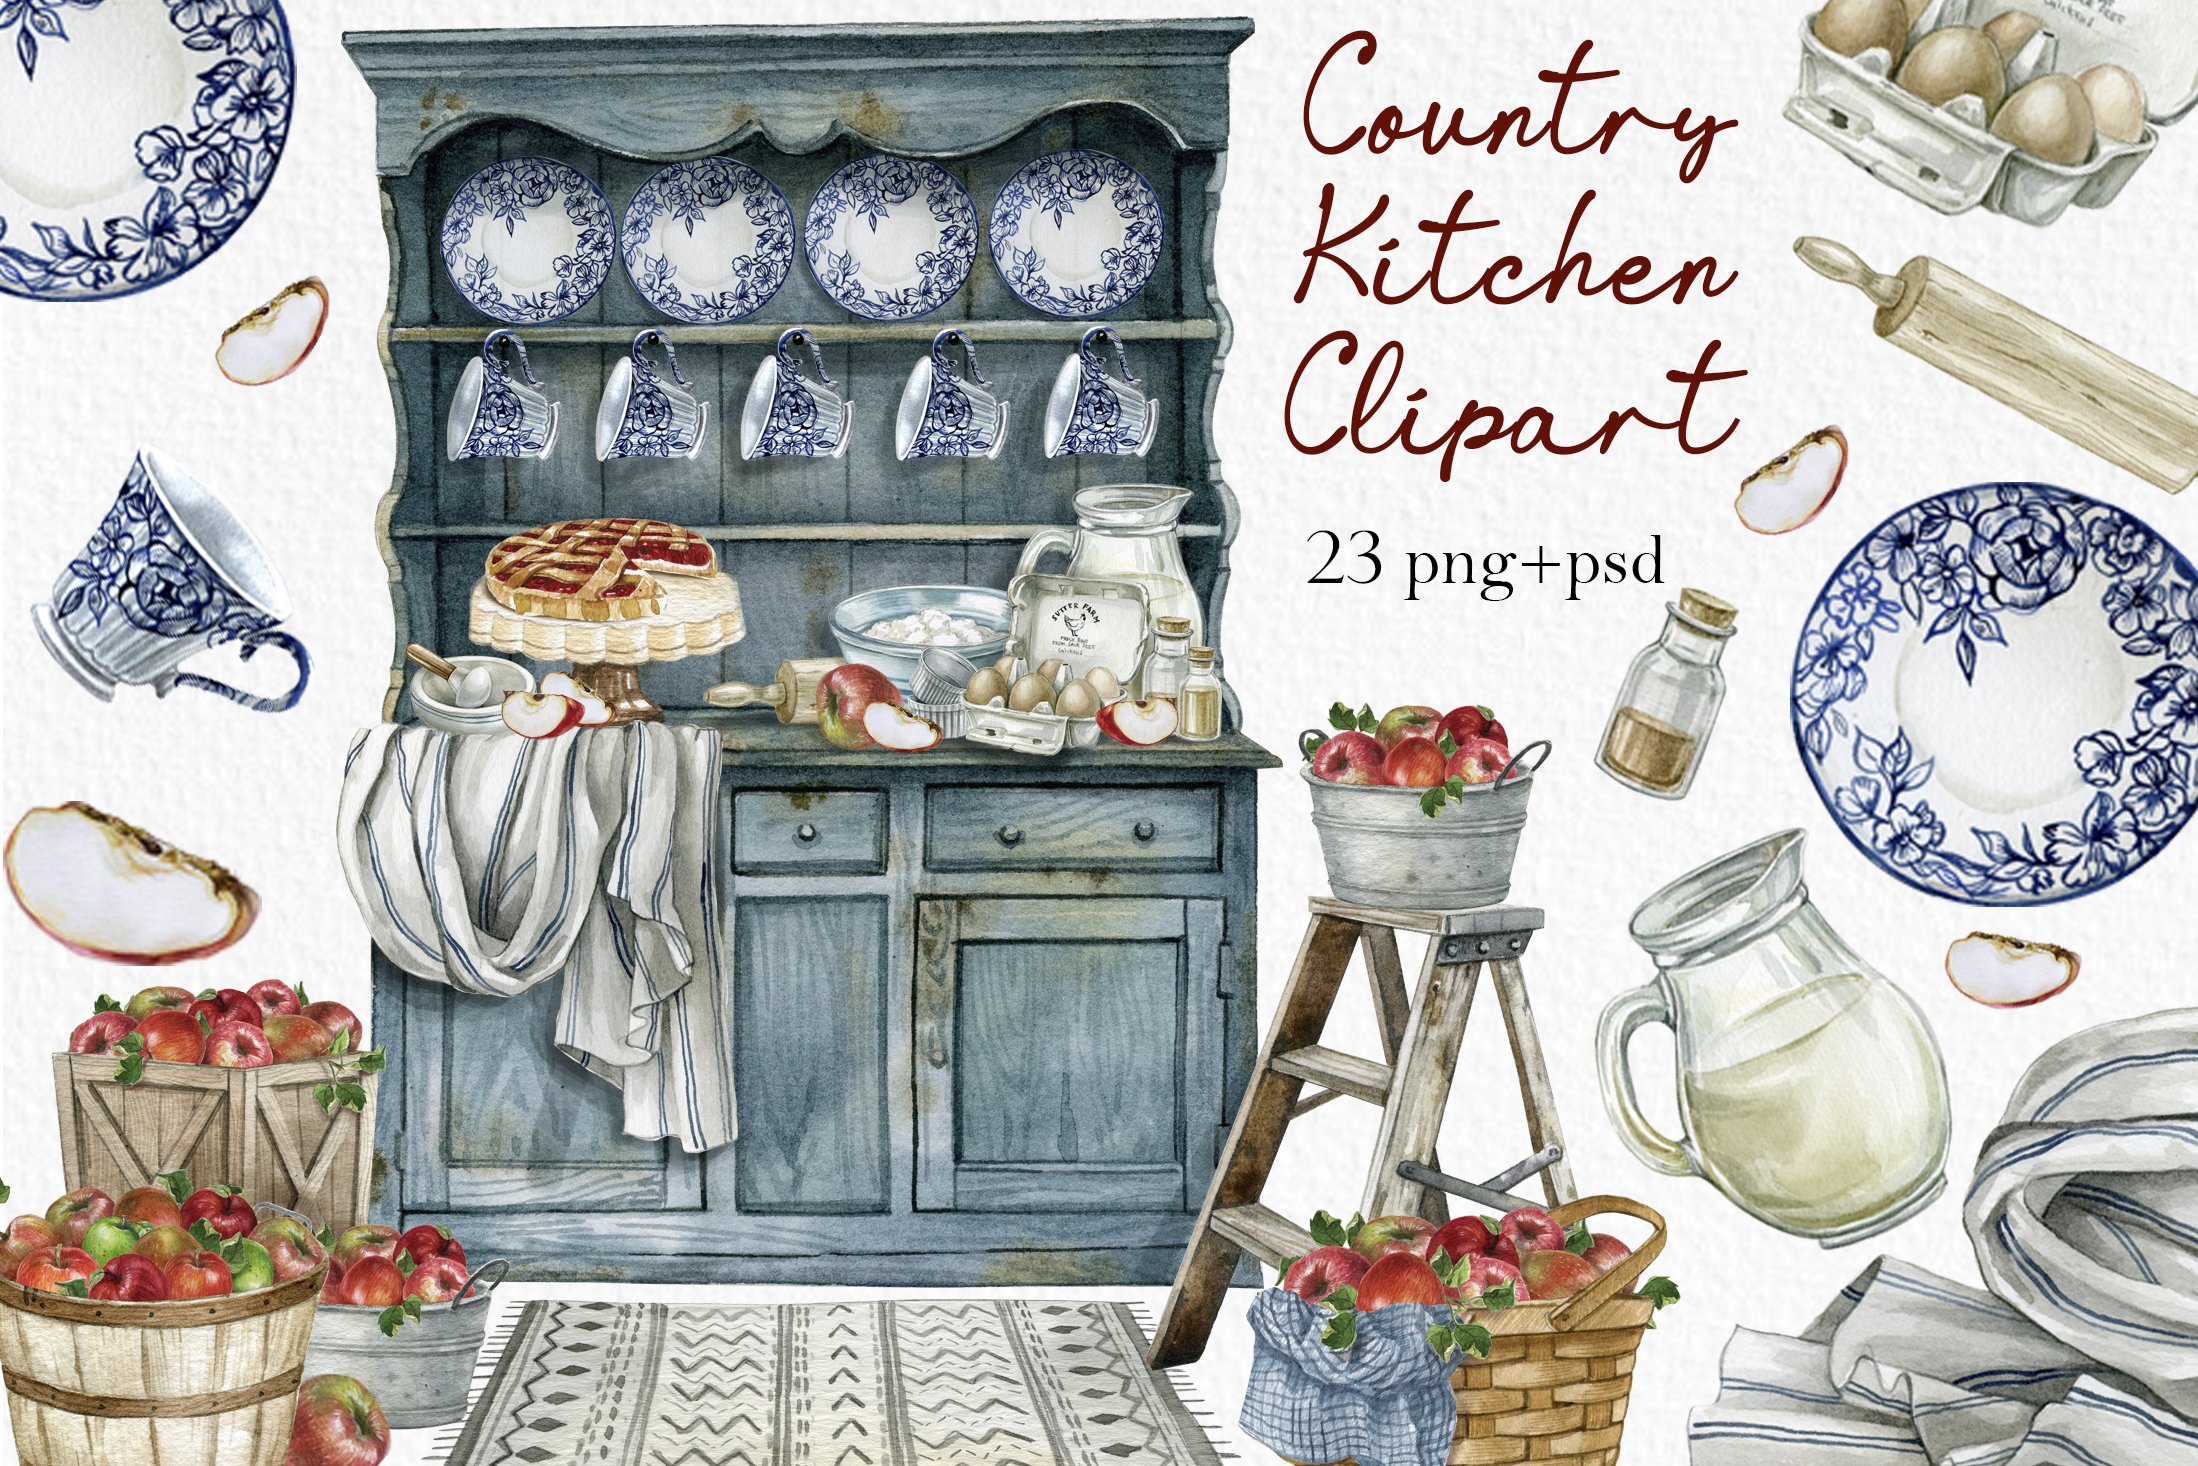 Watercolor vintage kitchen clipart cover image.